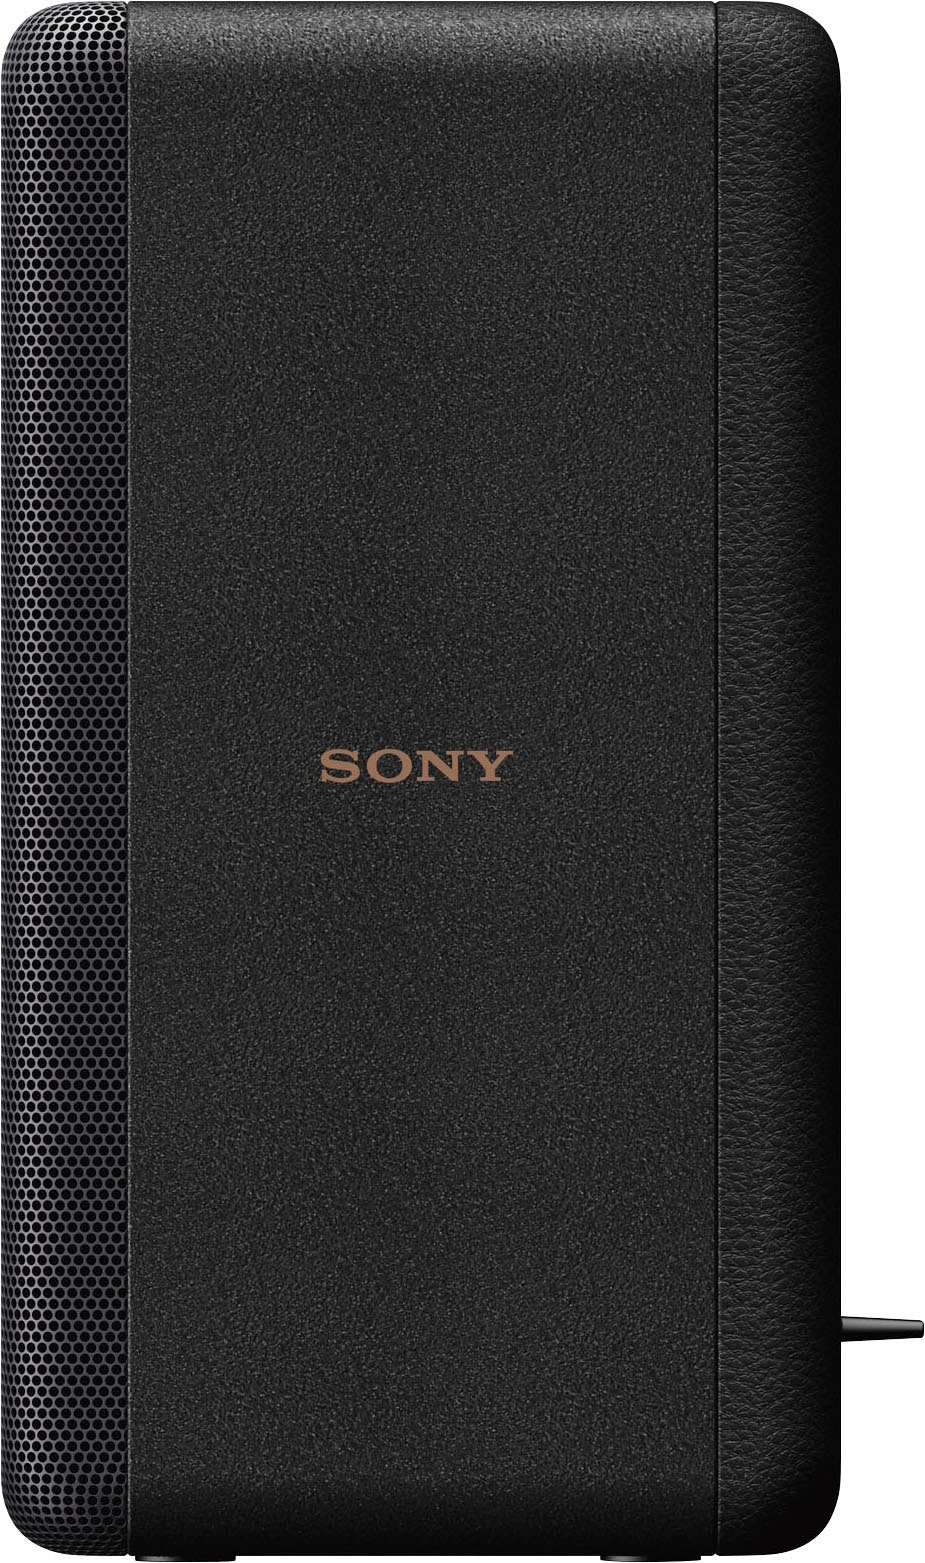 Sony SA-RS3S kabellose zweifache Stereo 100 Rear- Lautsprecher (WLAN, W)